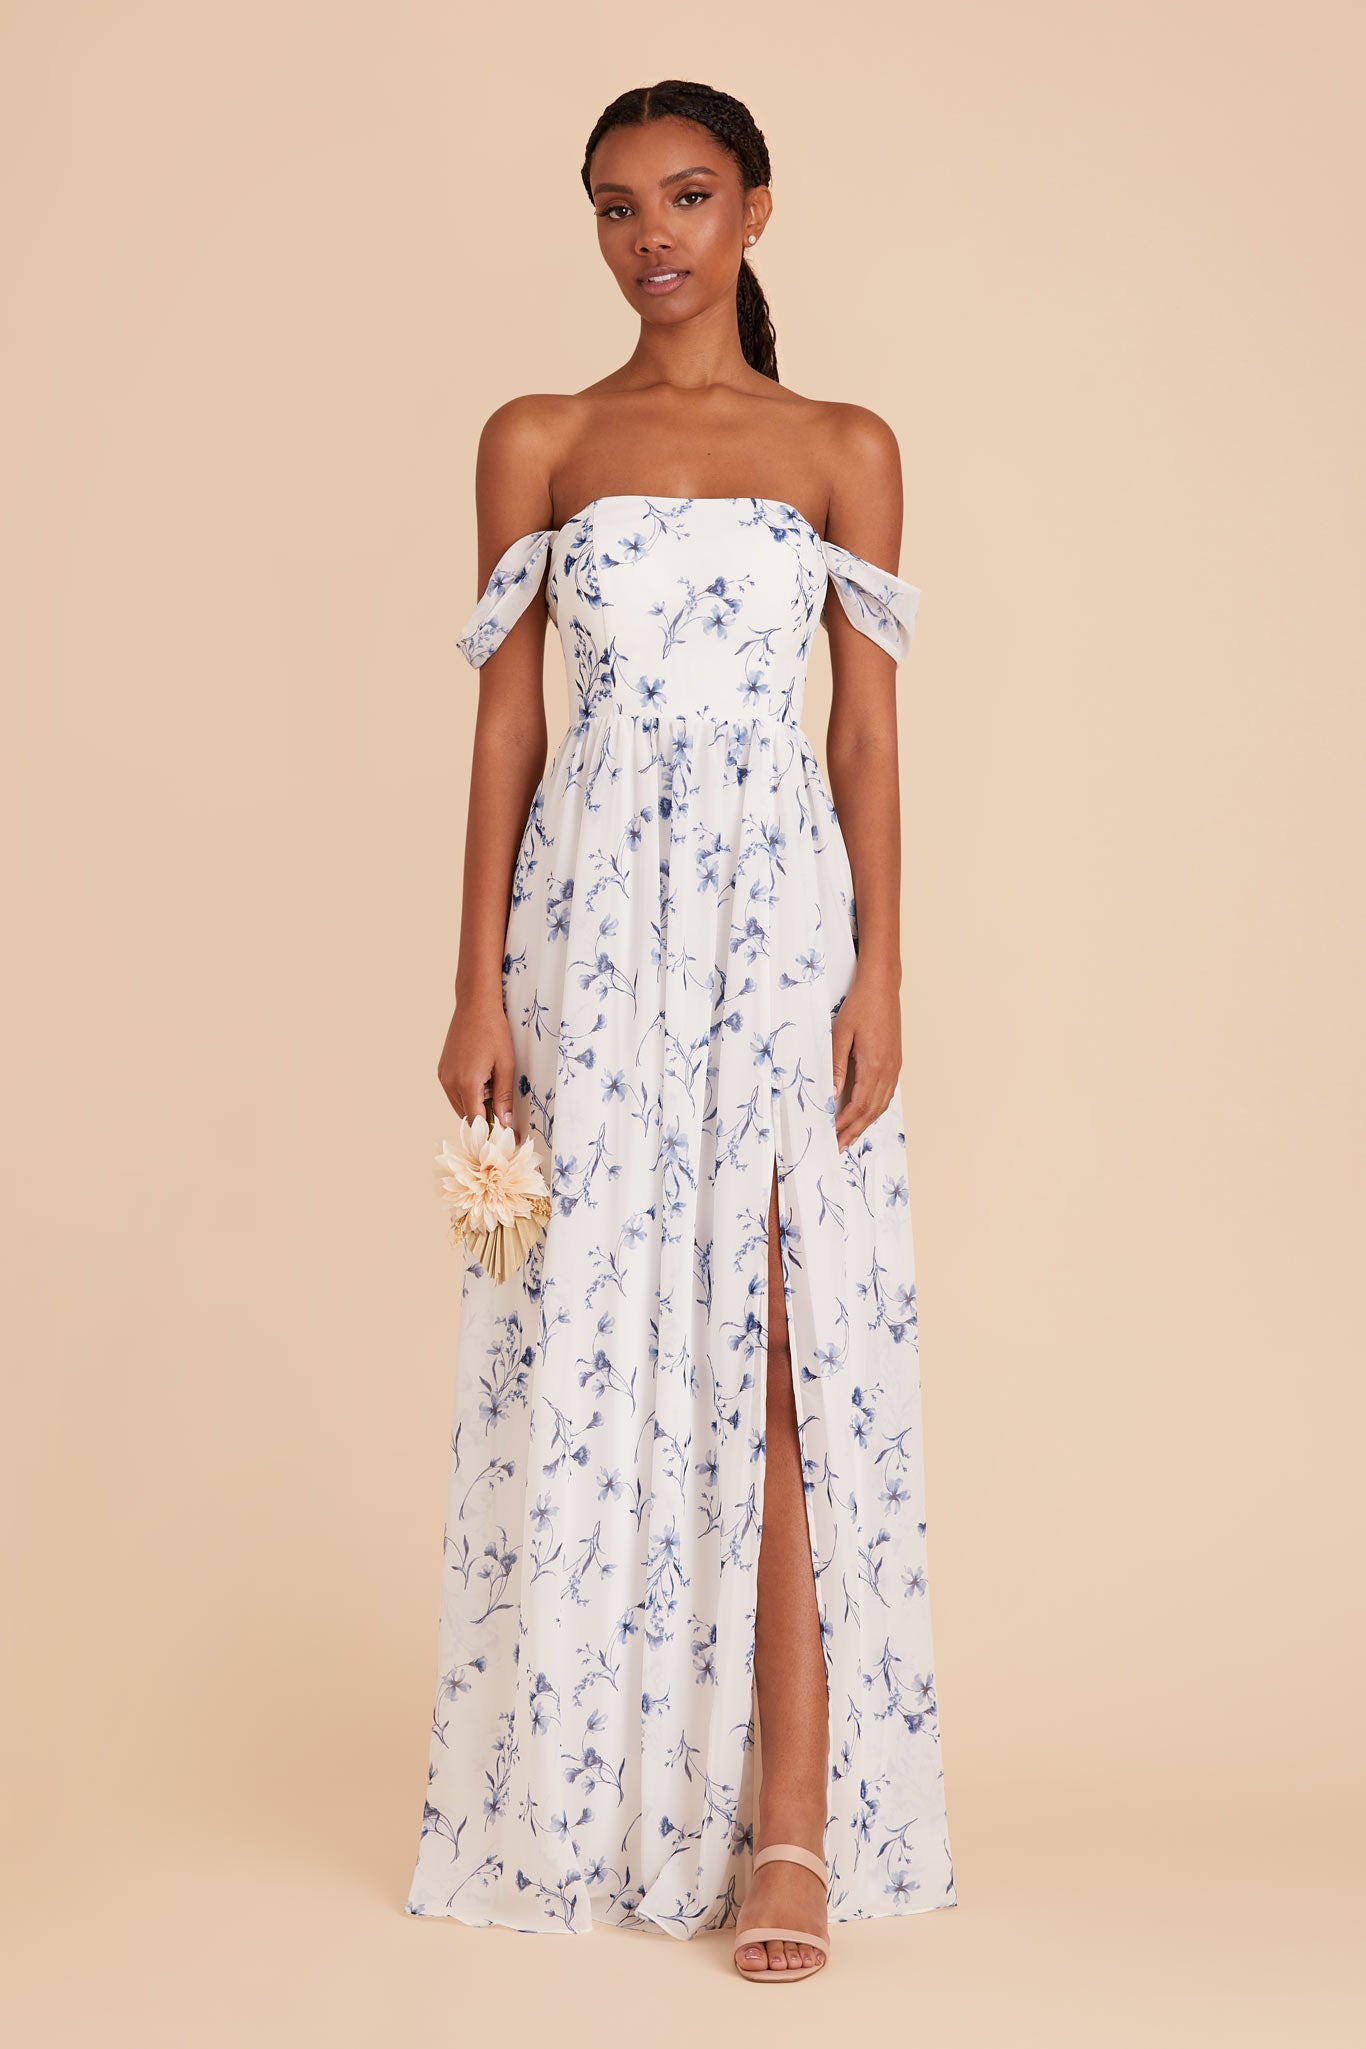 Blue Le Fleur August Convertible Dress by Birdy Grey